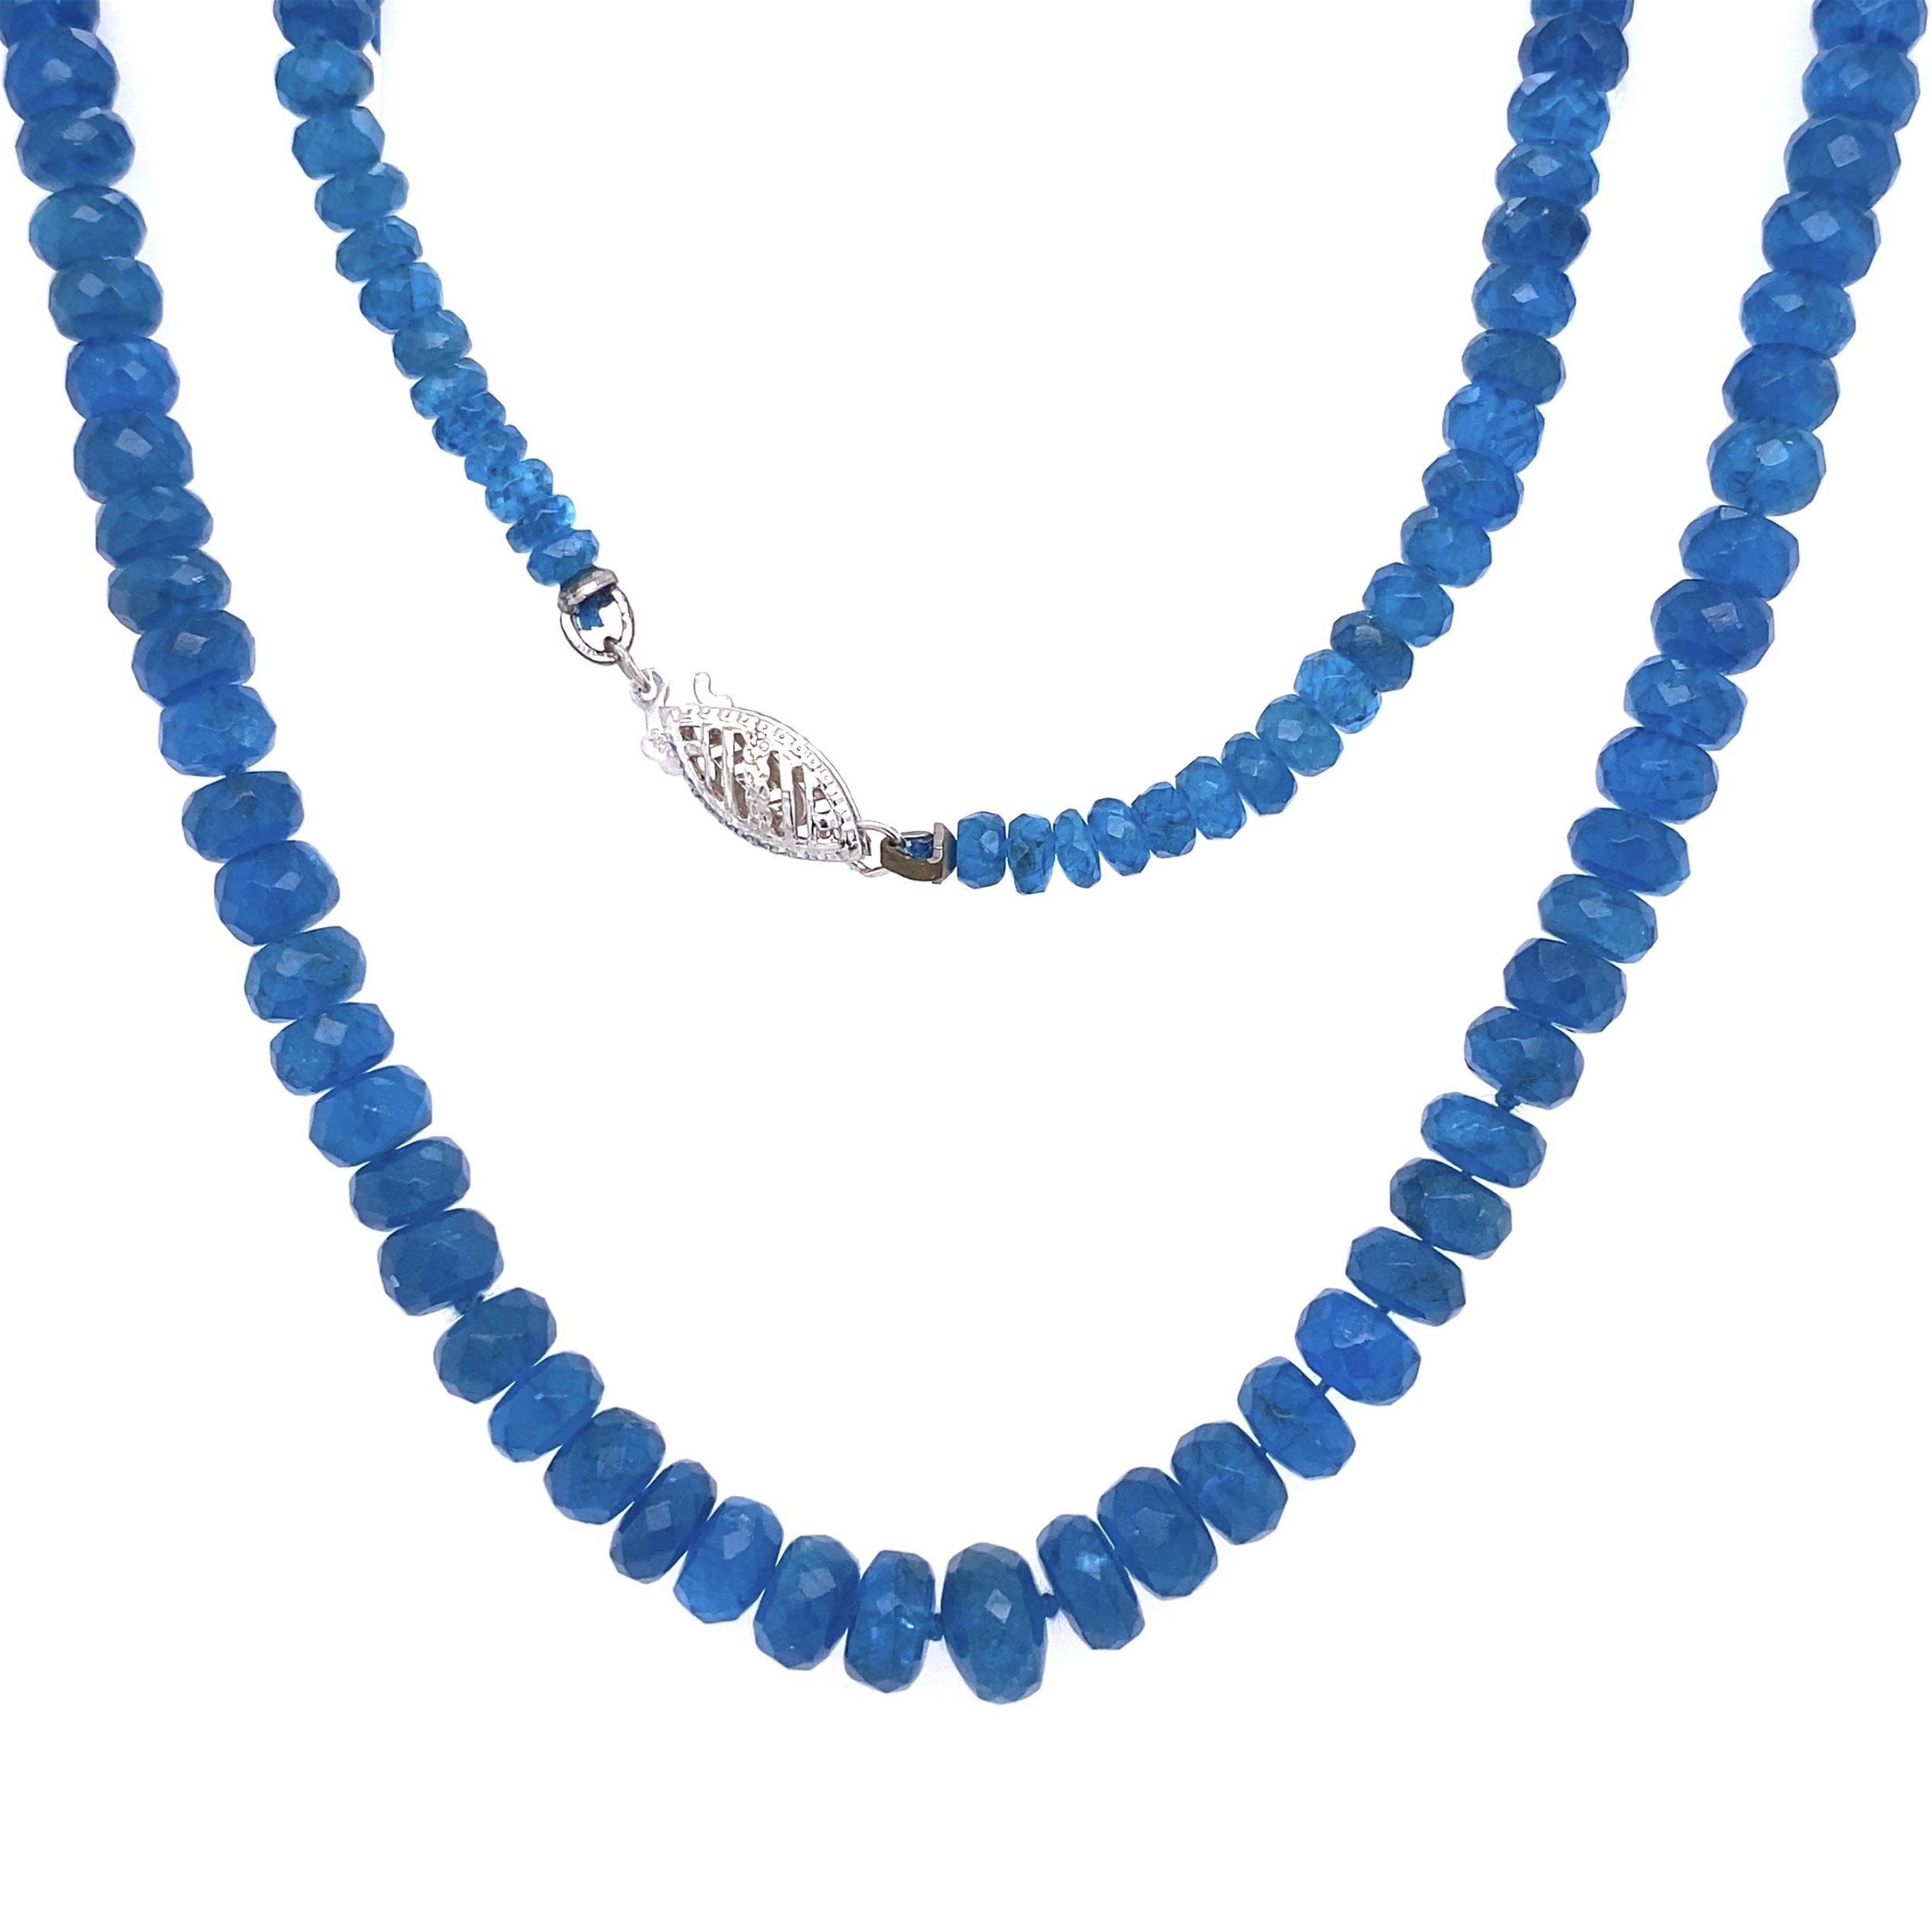 14K WG 110tcw Royal Blue Apatite Bead Necklace 3-7mm 22.3g, 19.5"